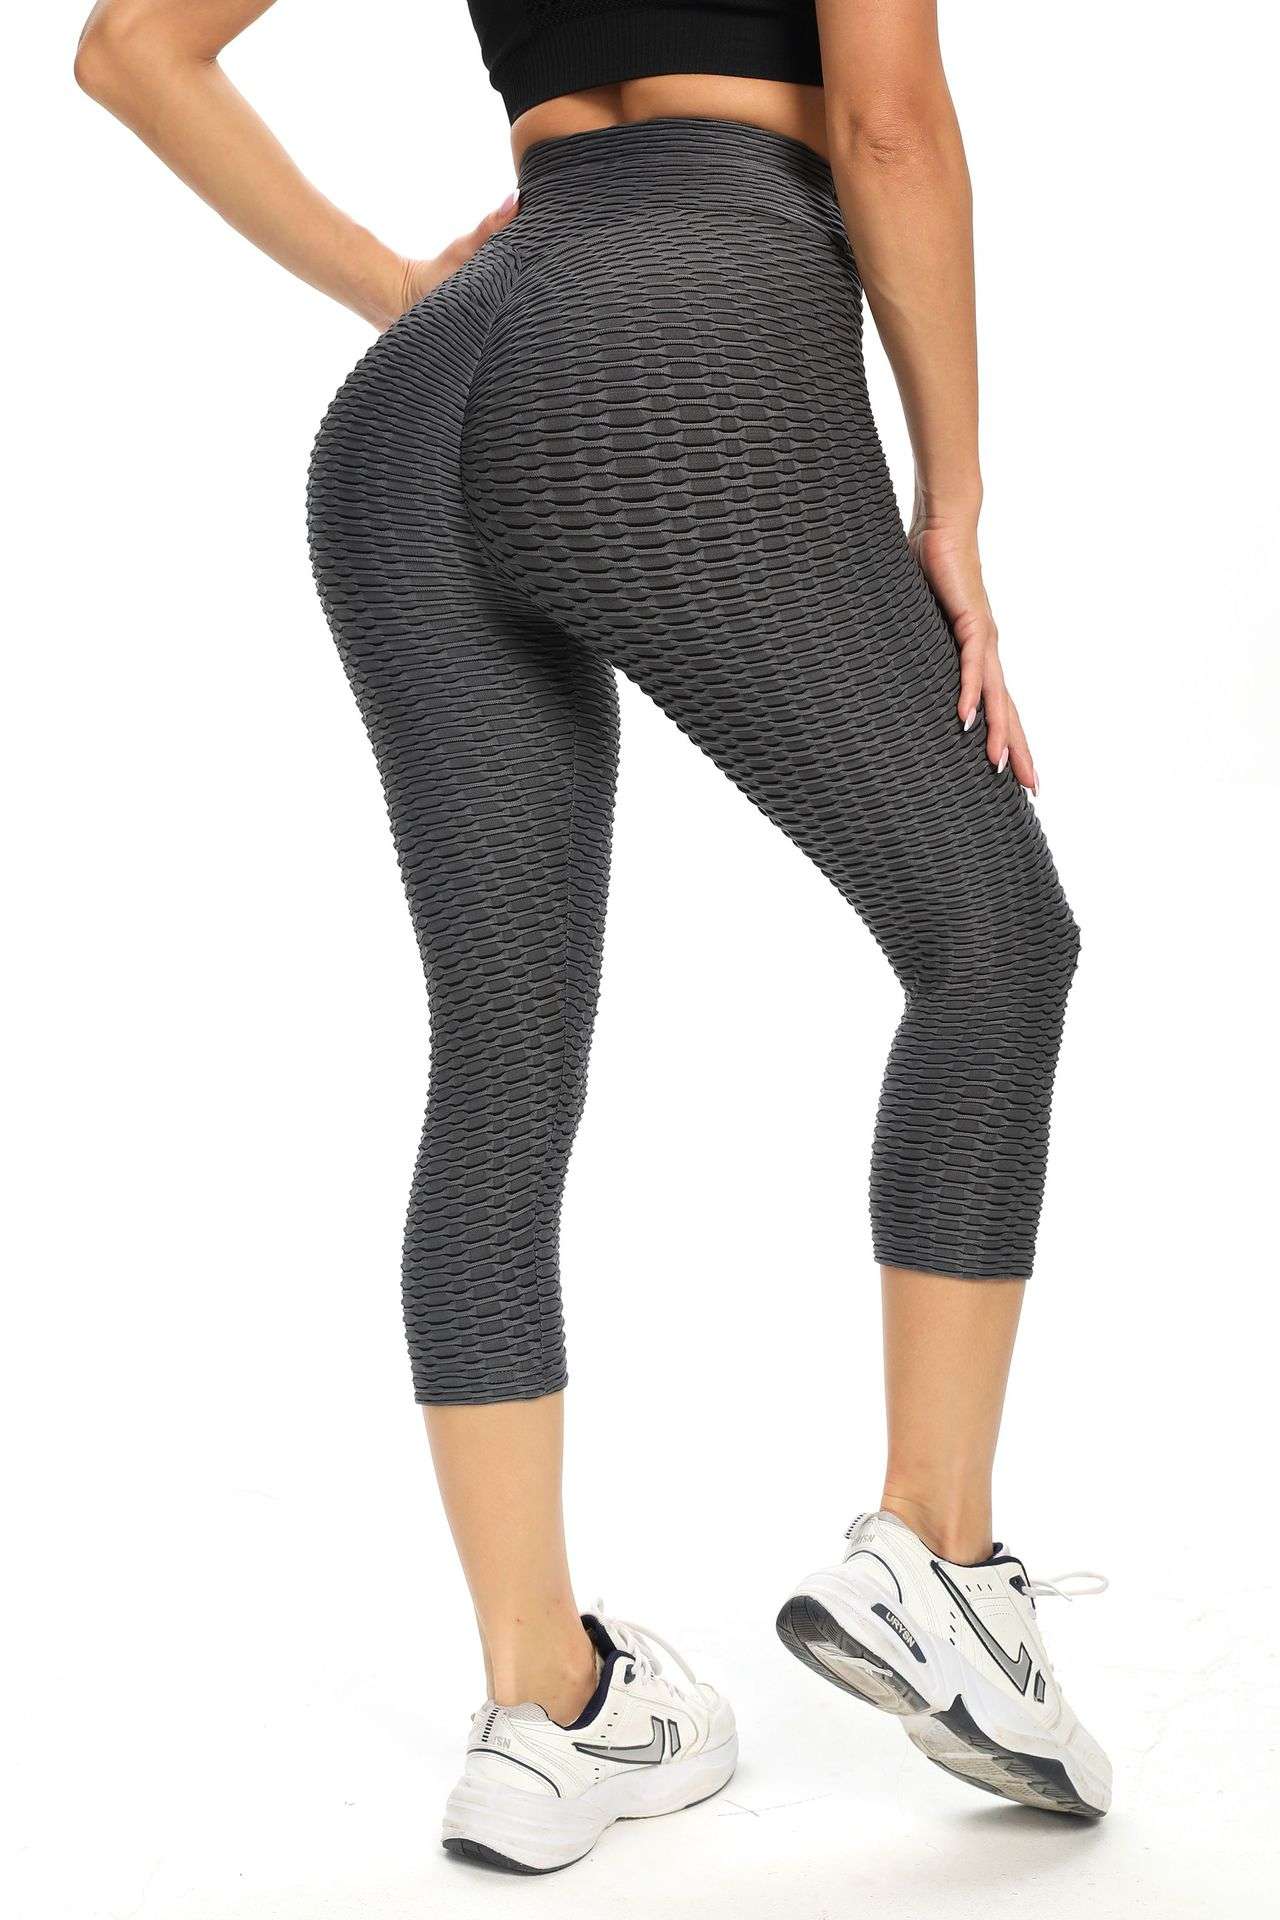 Women High Waist Yoga Pants Anti-Cellulite Leggings Sport Gym Honeycomb  Trousers | eBay